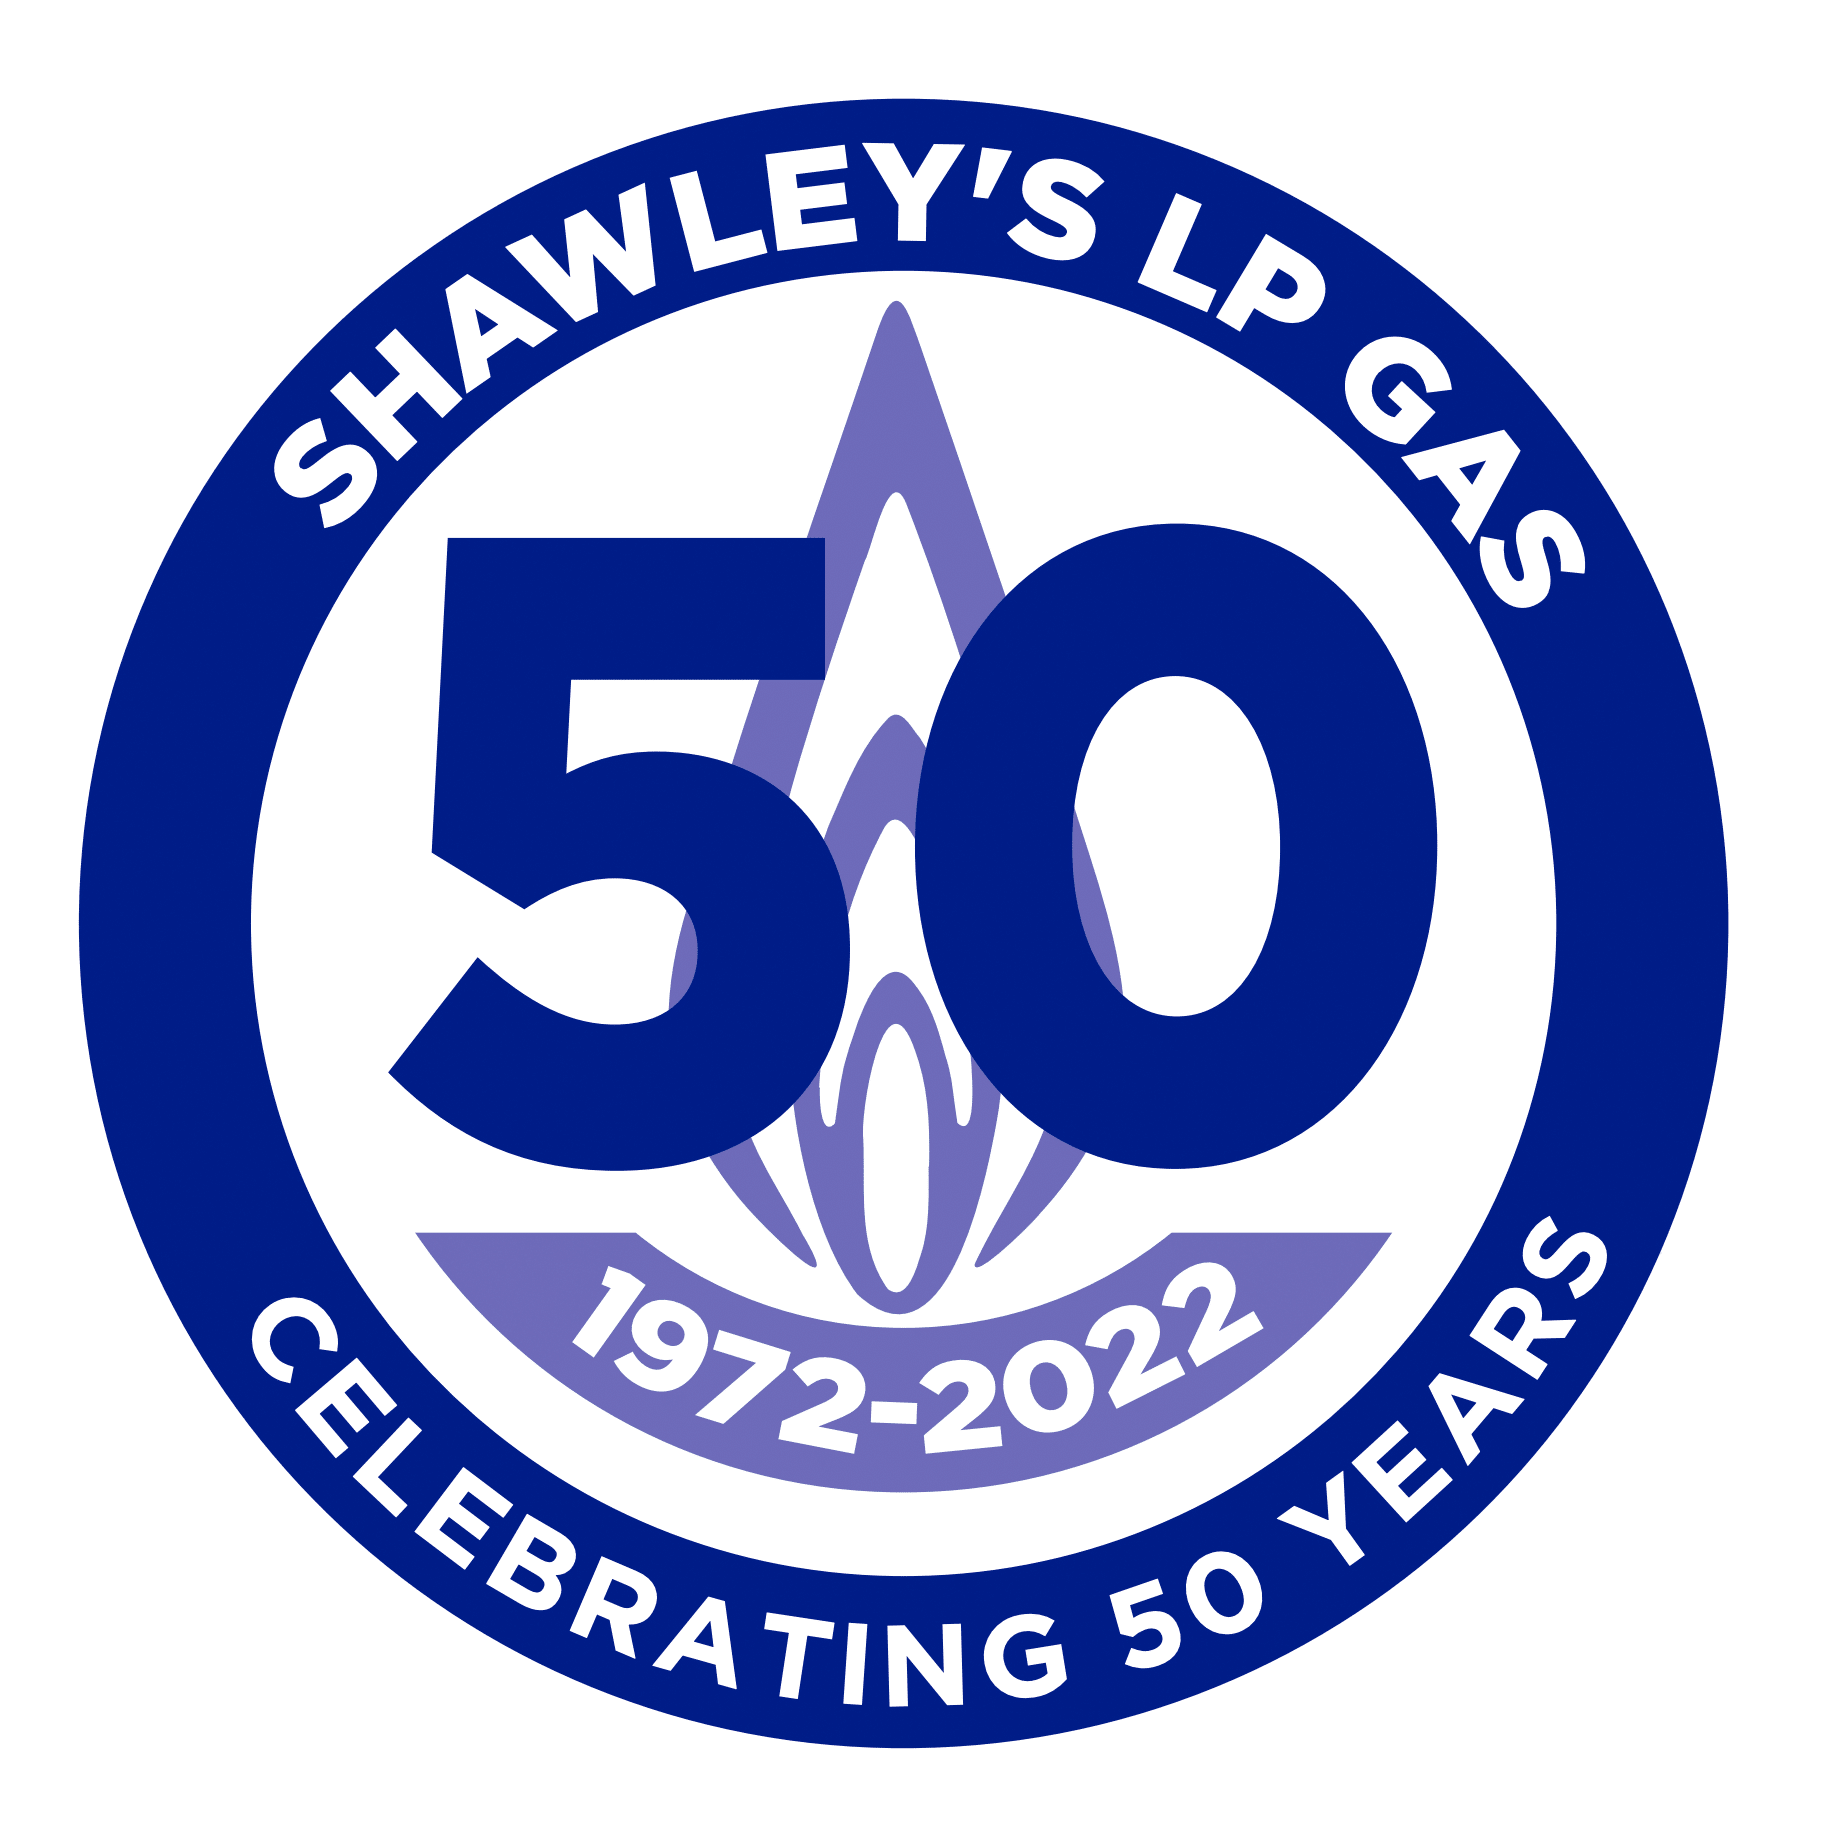 Shawley's 50 year celebration logo